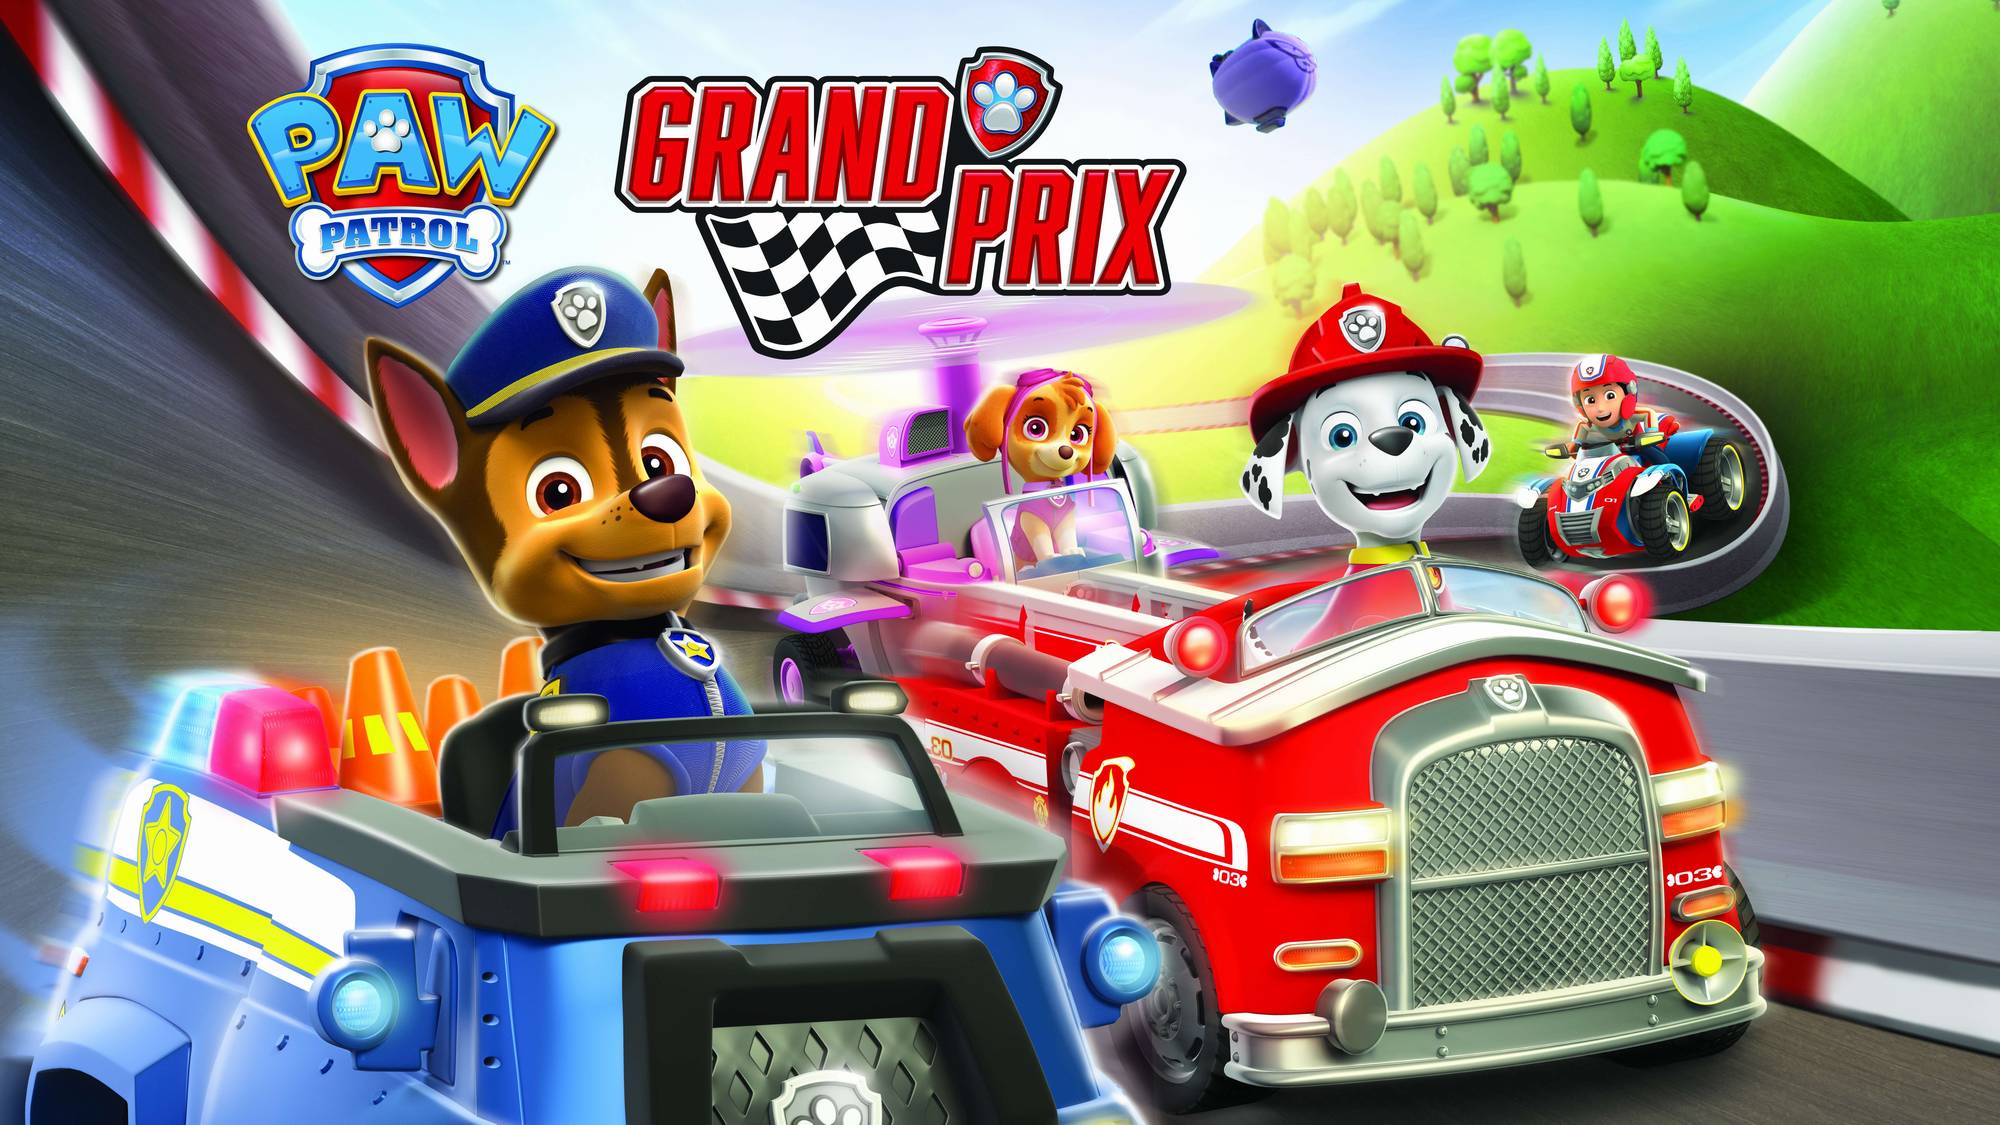 PAW Patrol Grand Prix